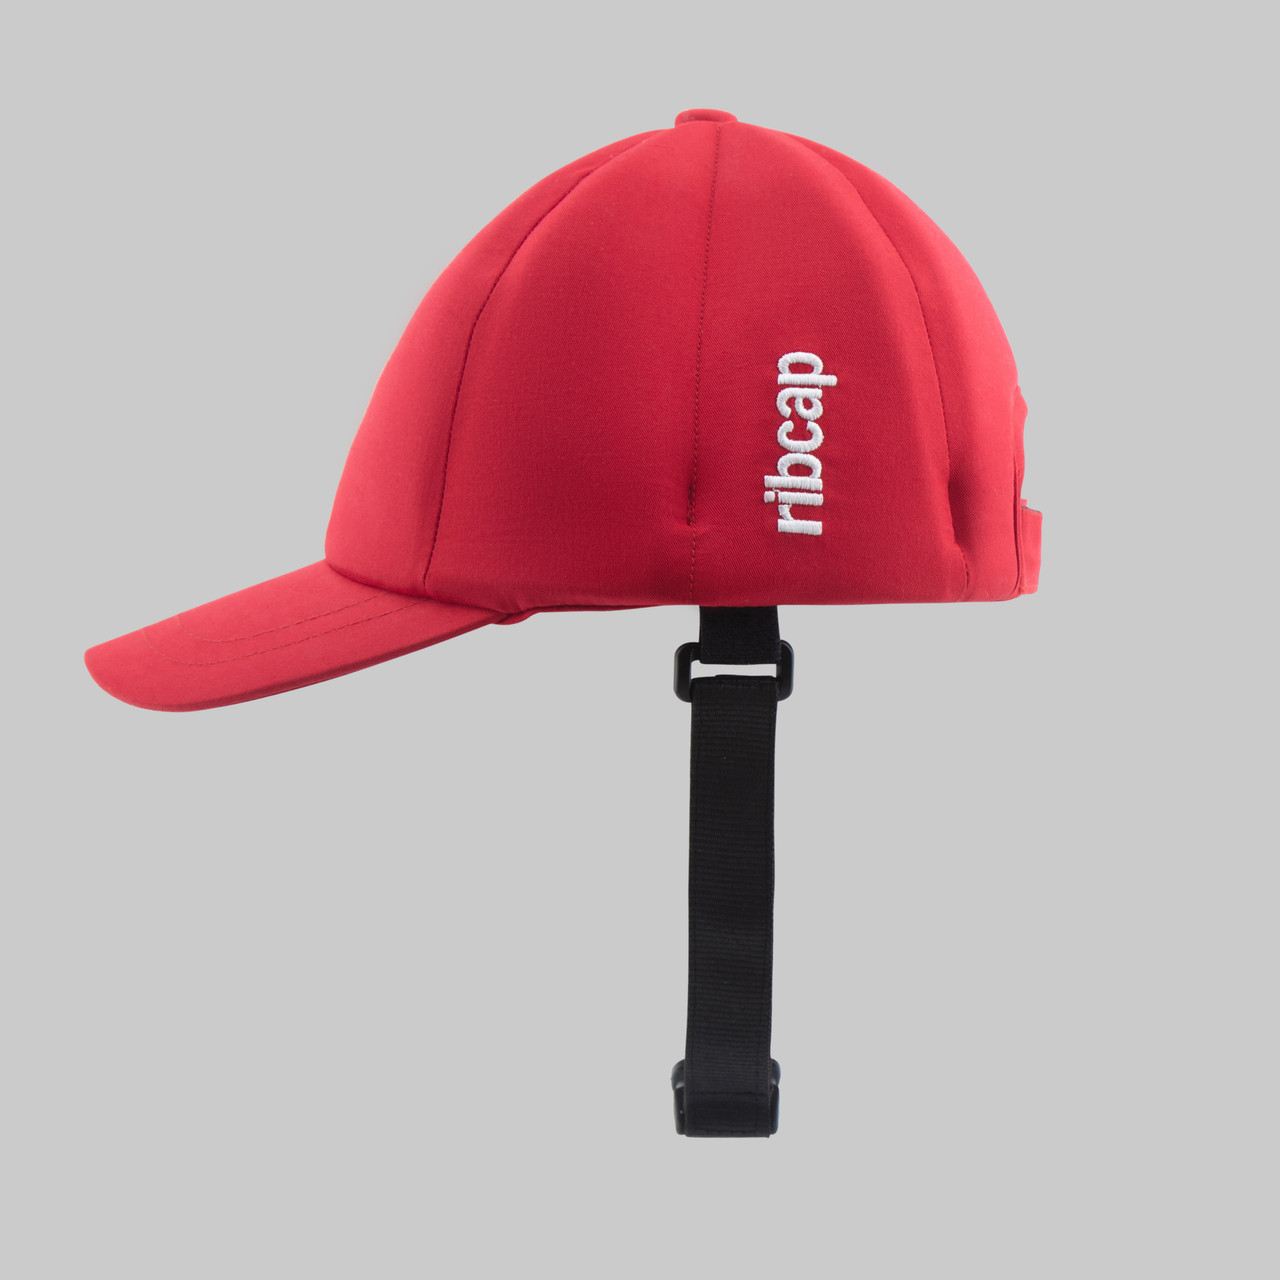 Donder Ja over Ribcap | The best stylish seizure helmet | Summer cap | BSI TESTED